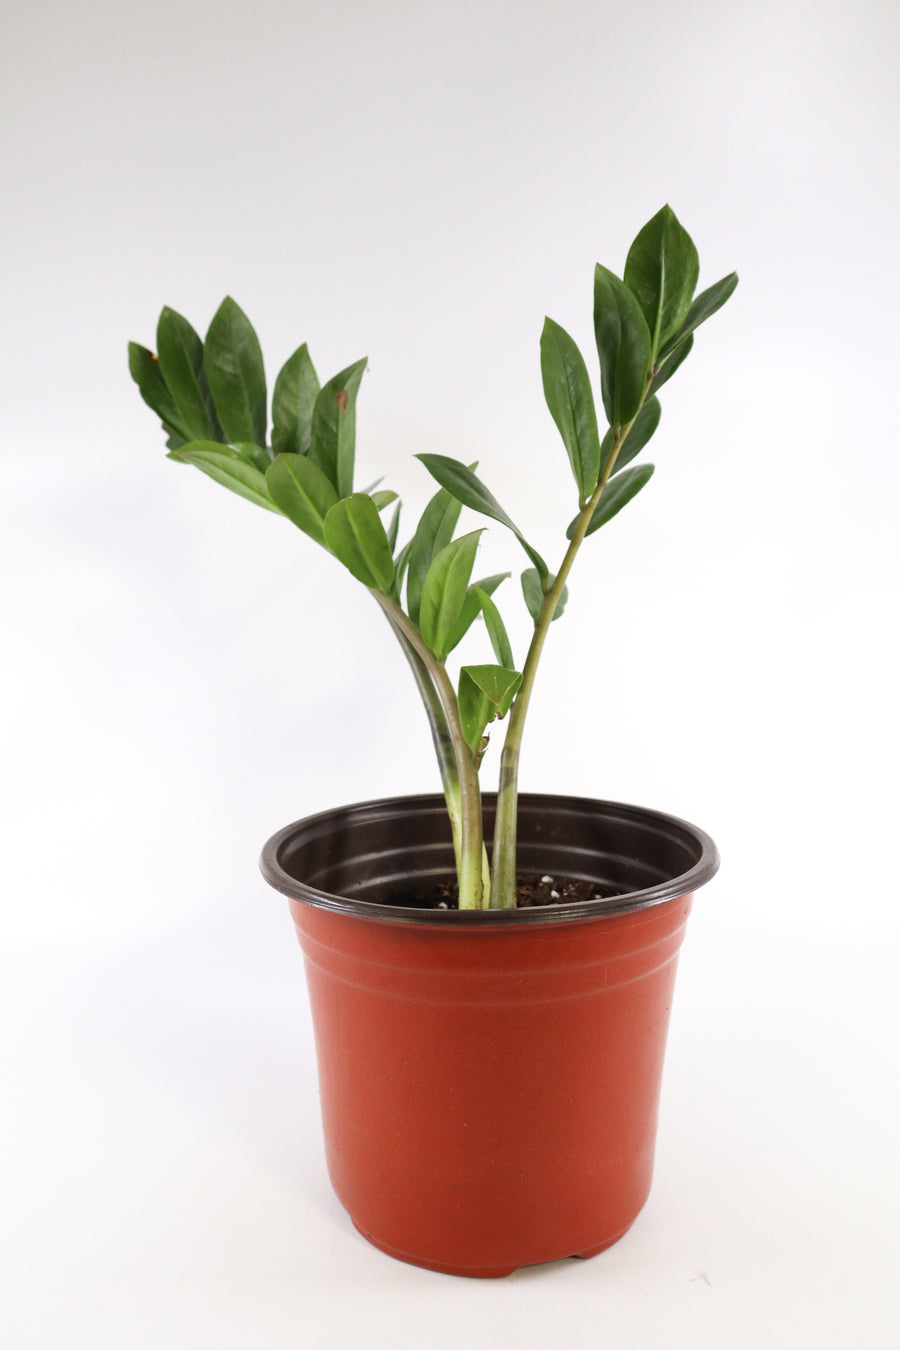 ZZ Plant in a Gray Ceramic Nursery Pot